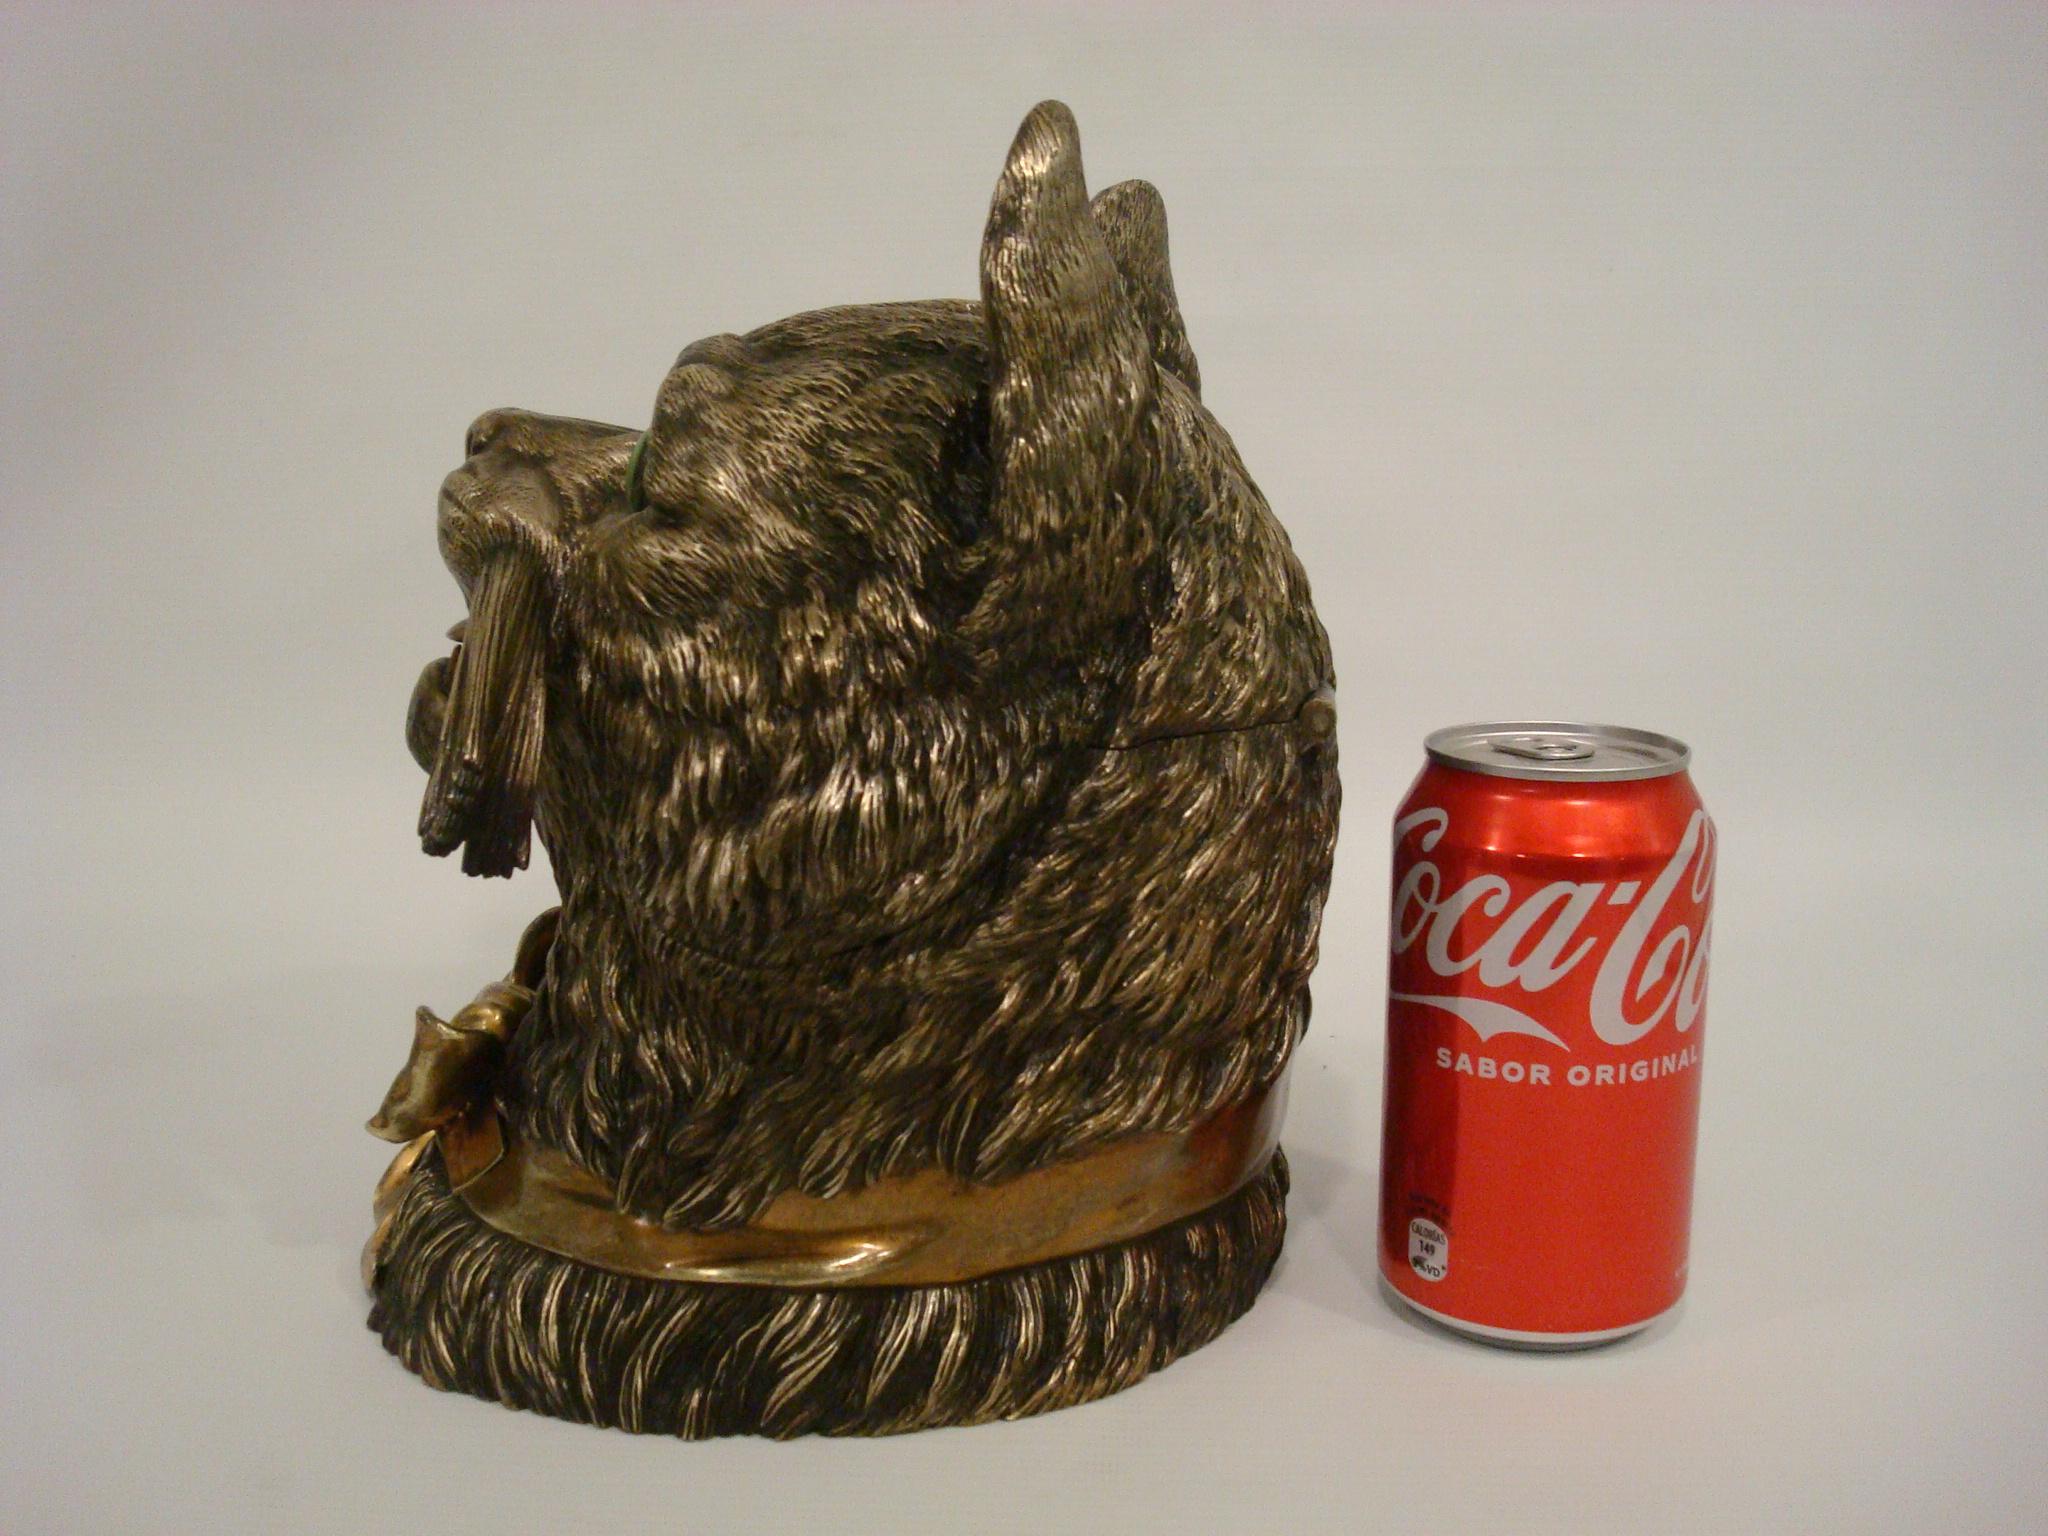 Humidor-Skulptur eines Katzenkopfes aus Bronze, Zigarren/Zigarettenform im Angebot 8